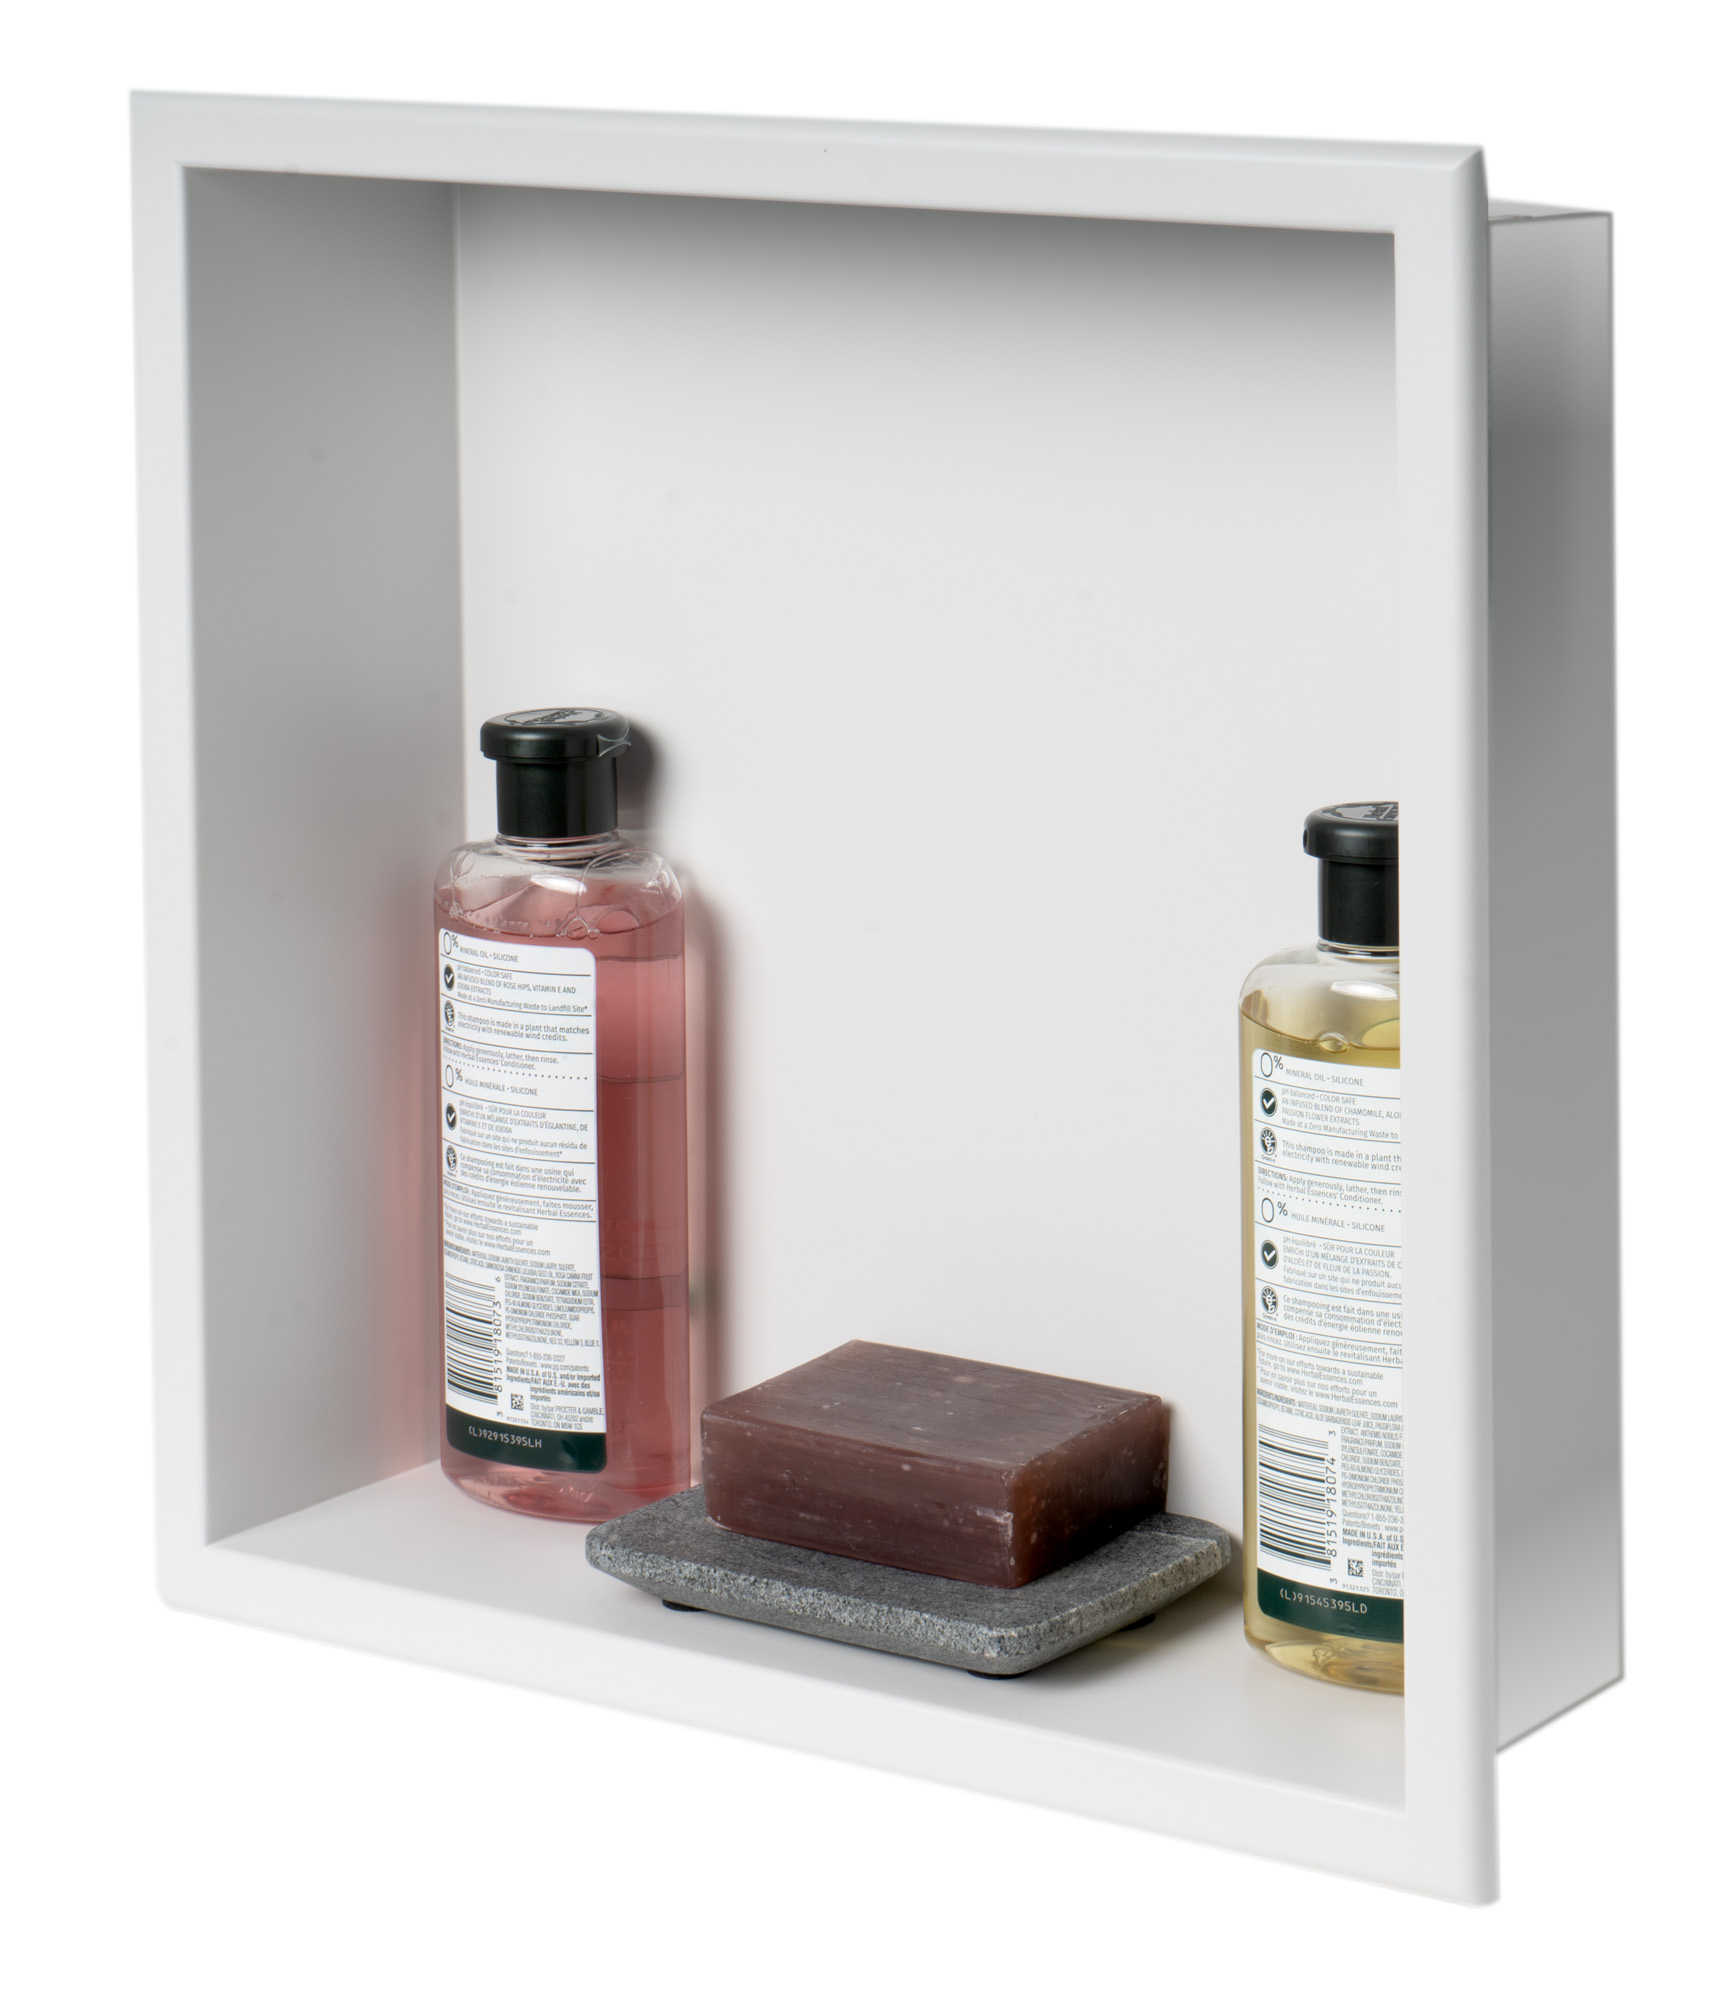 ALFI brand ABNC1616-W 16" x 16" White Matte Stainless Steel Square Single Shelf Bath Shower Niche